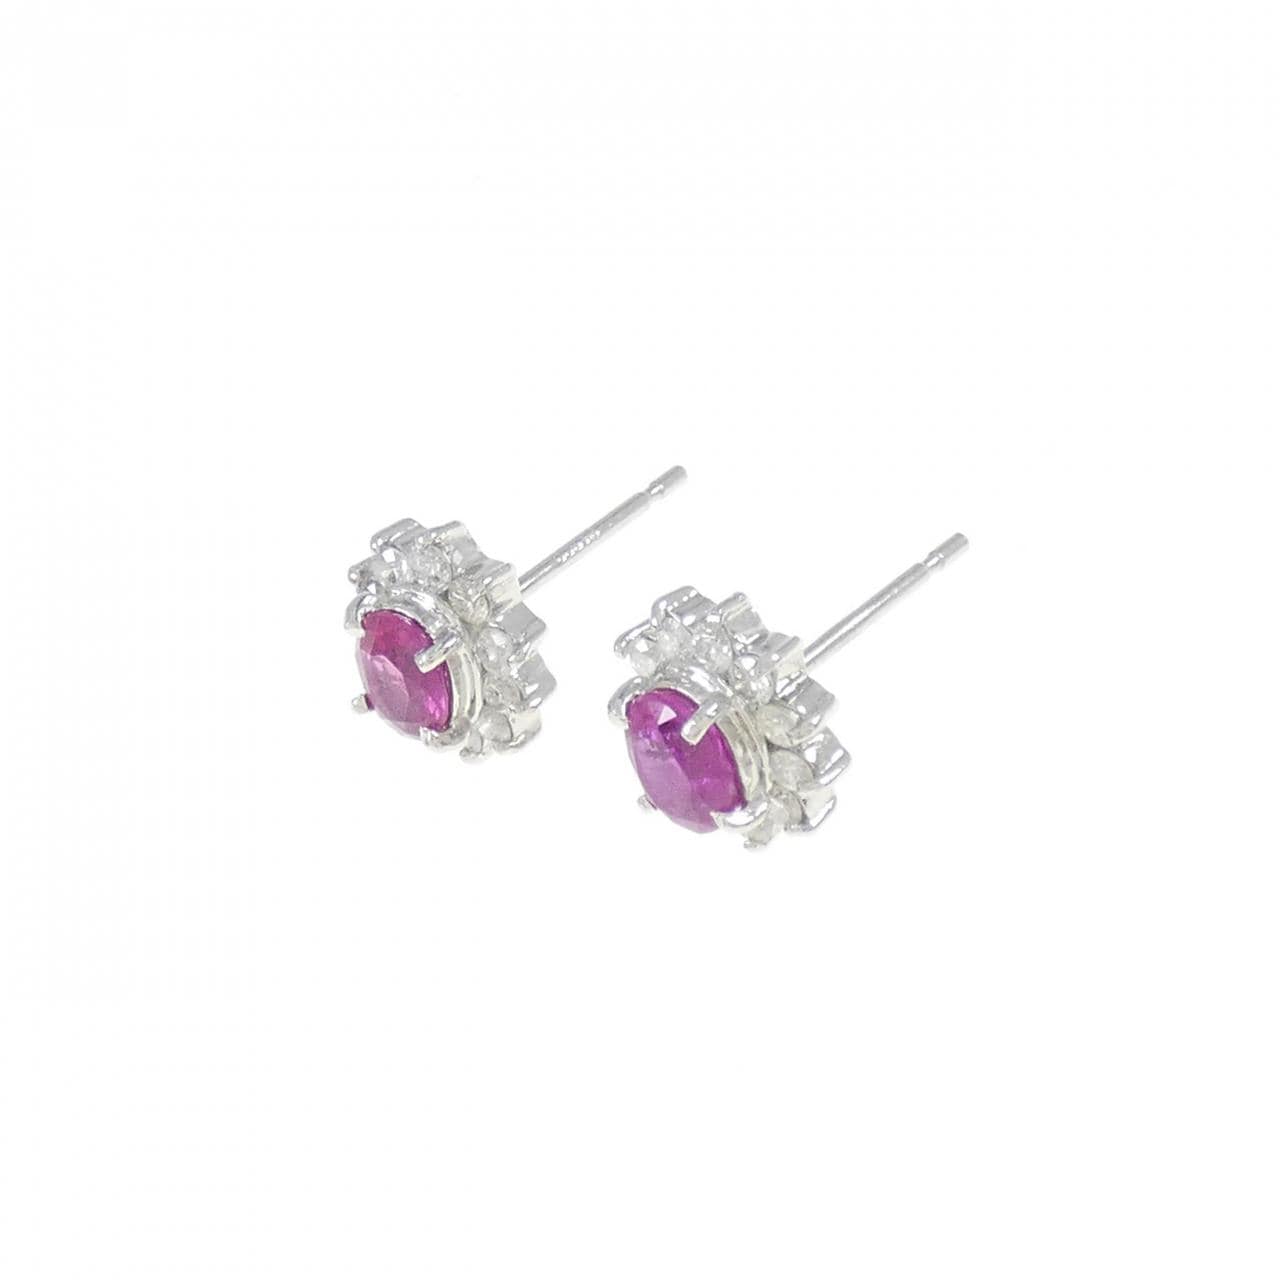 PT ruby earrings